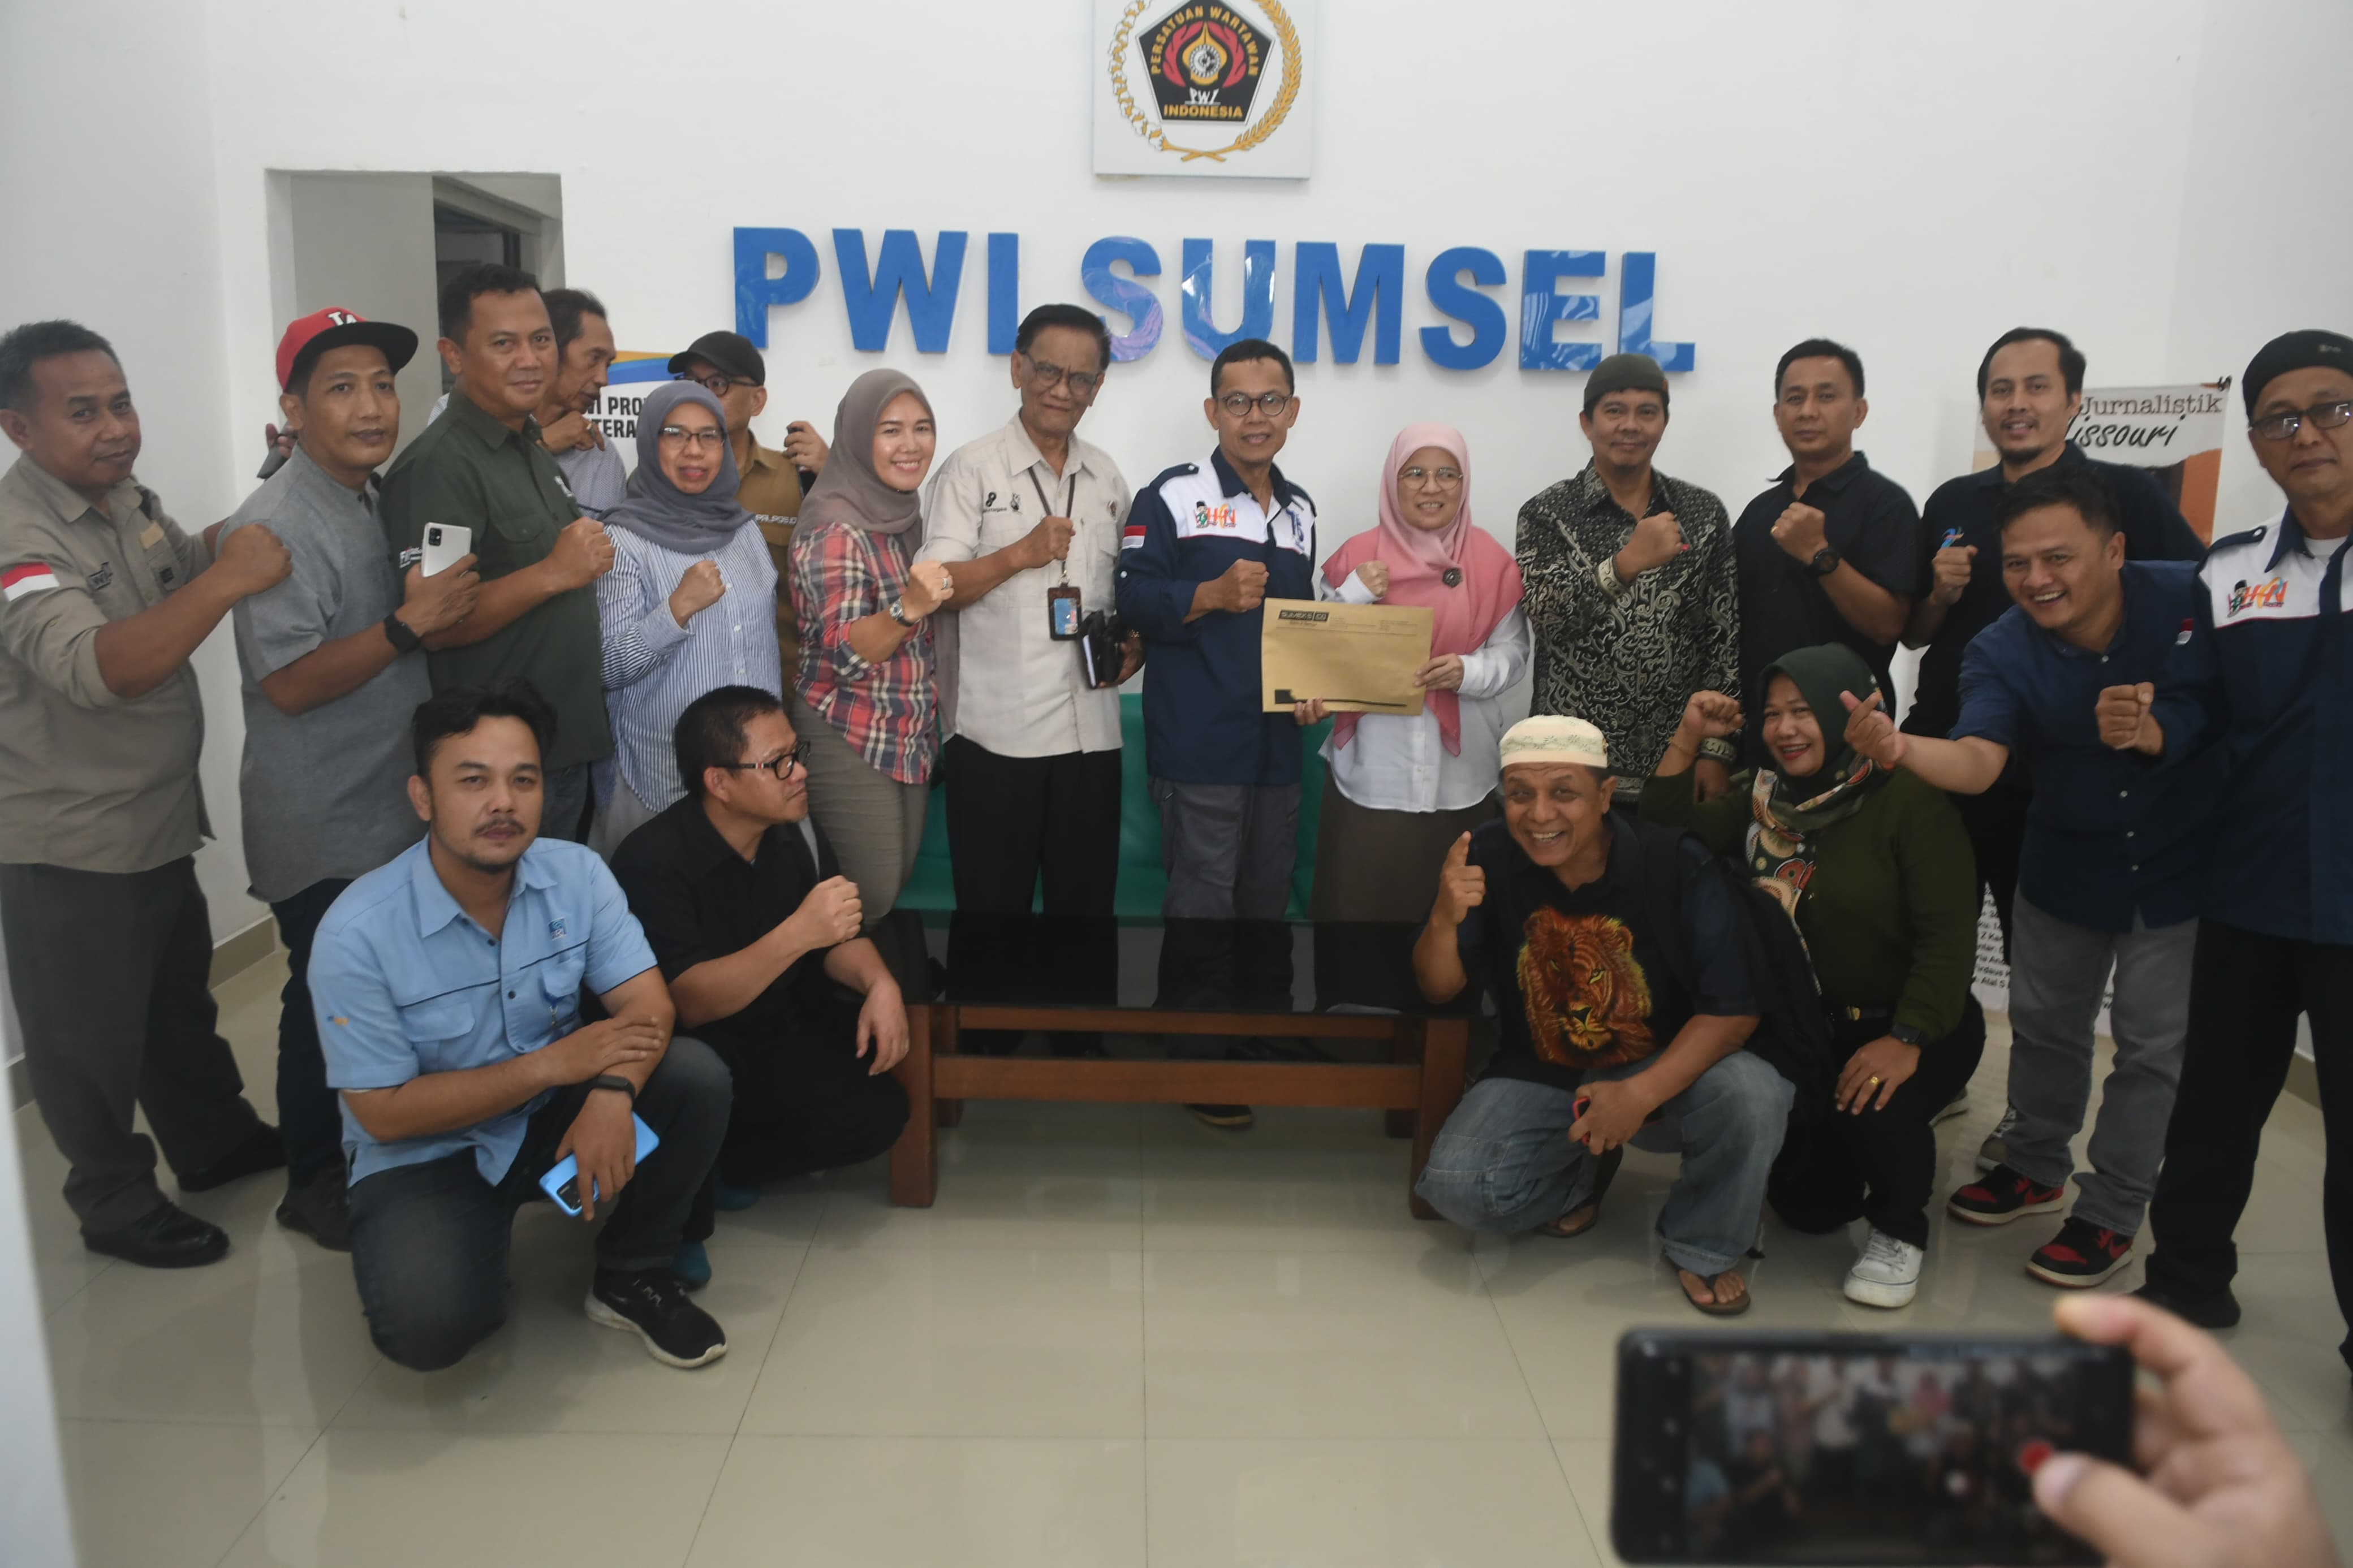 Bersama Rombongan Sumatera Ekspres Group, Dwitri Kartini Serahkan Berkas Pencalonan Ketua PWI Sumsel